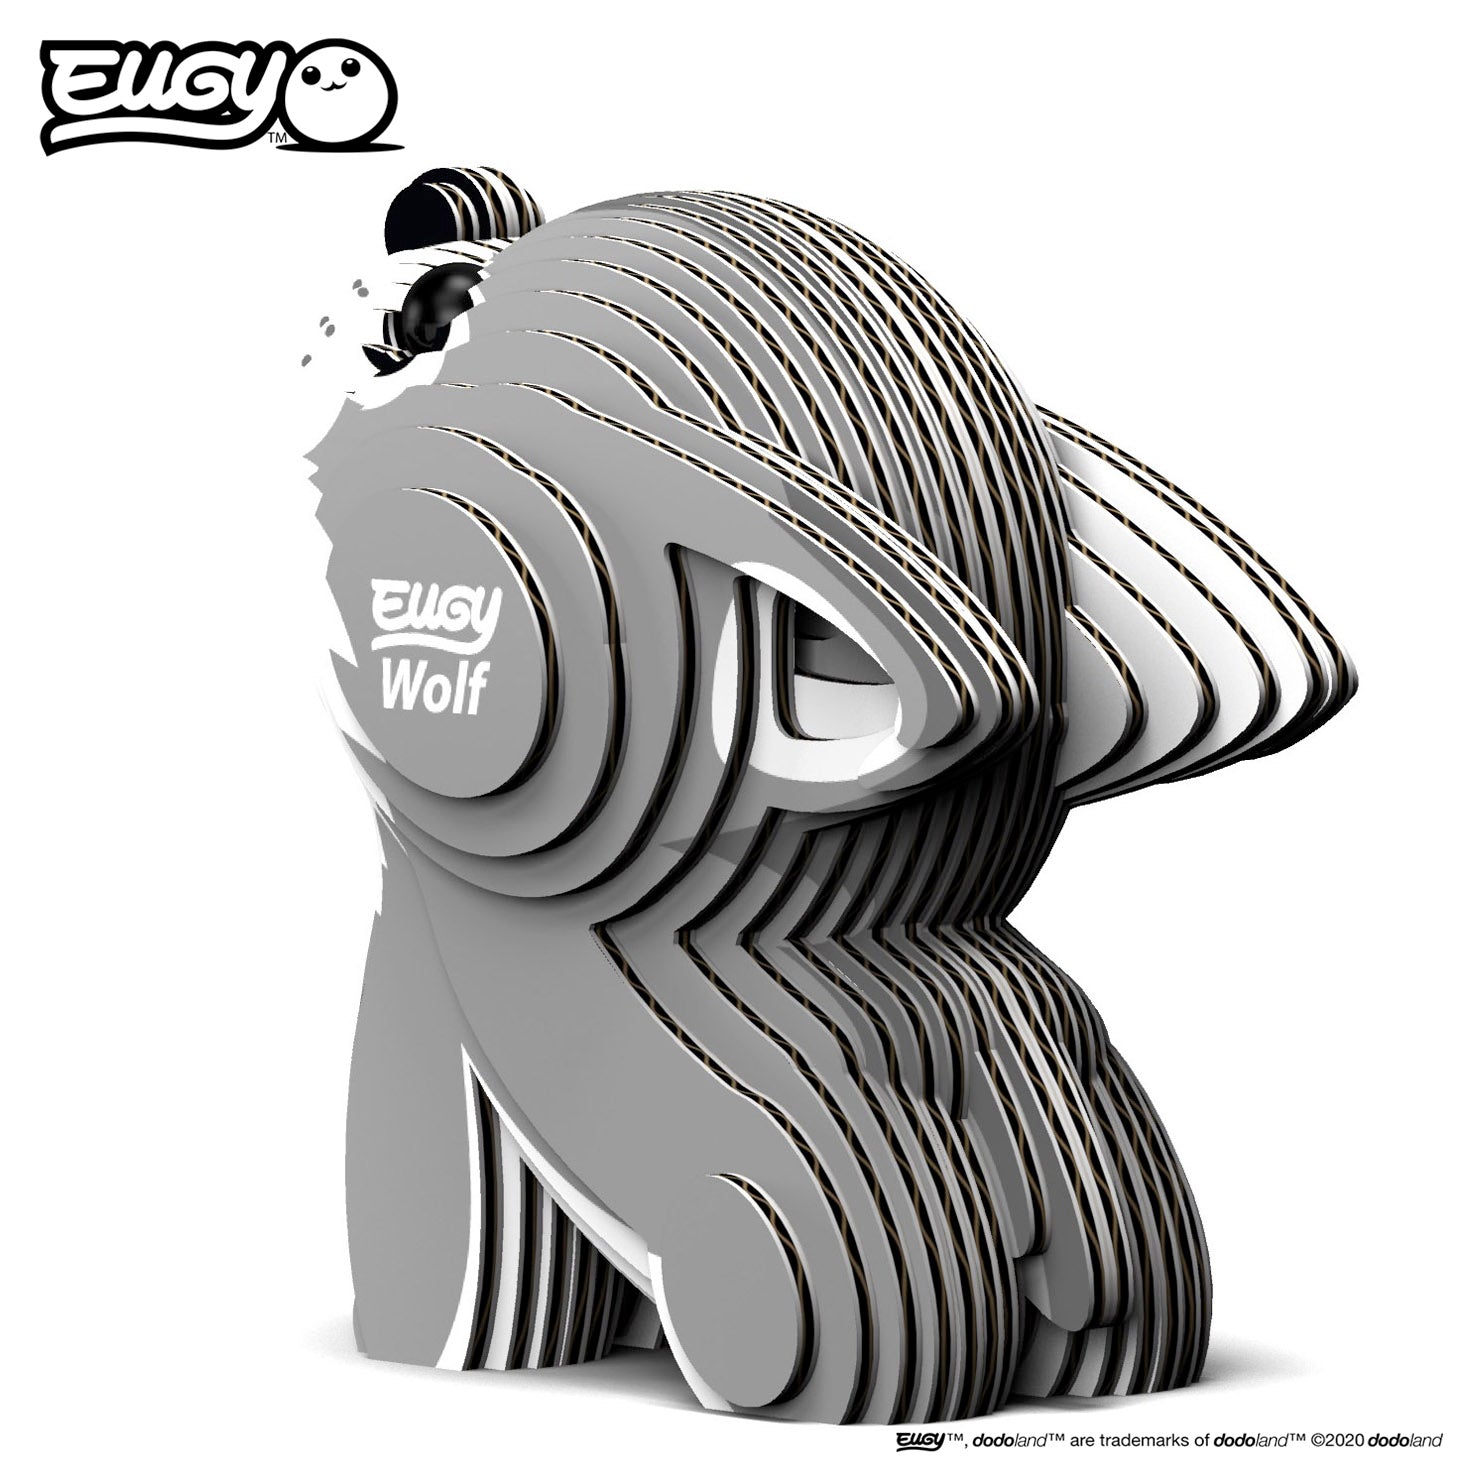 EUGY Wolf - 3D Cardboard Model Kit